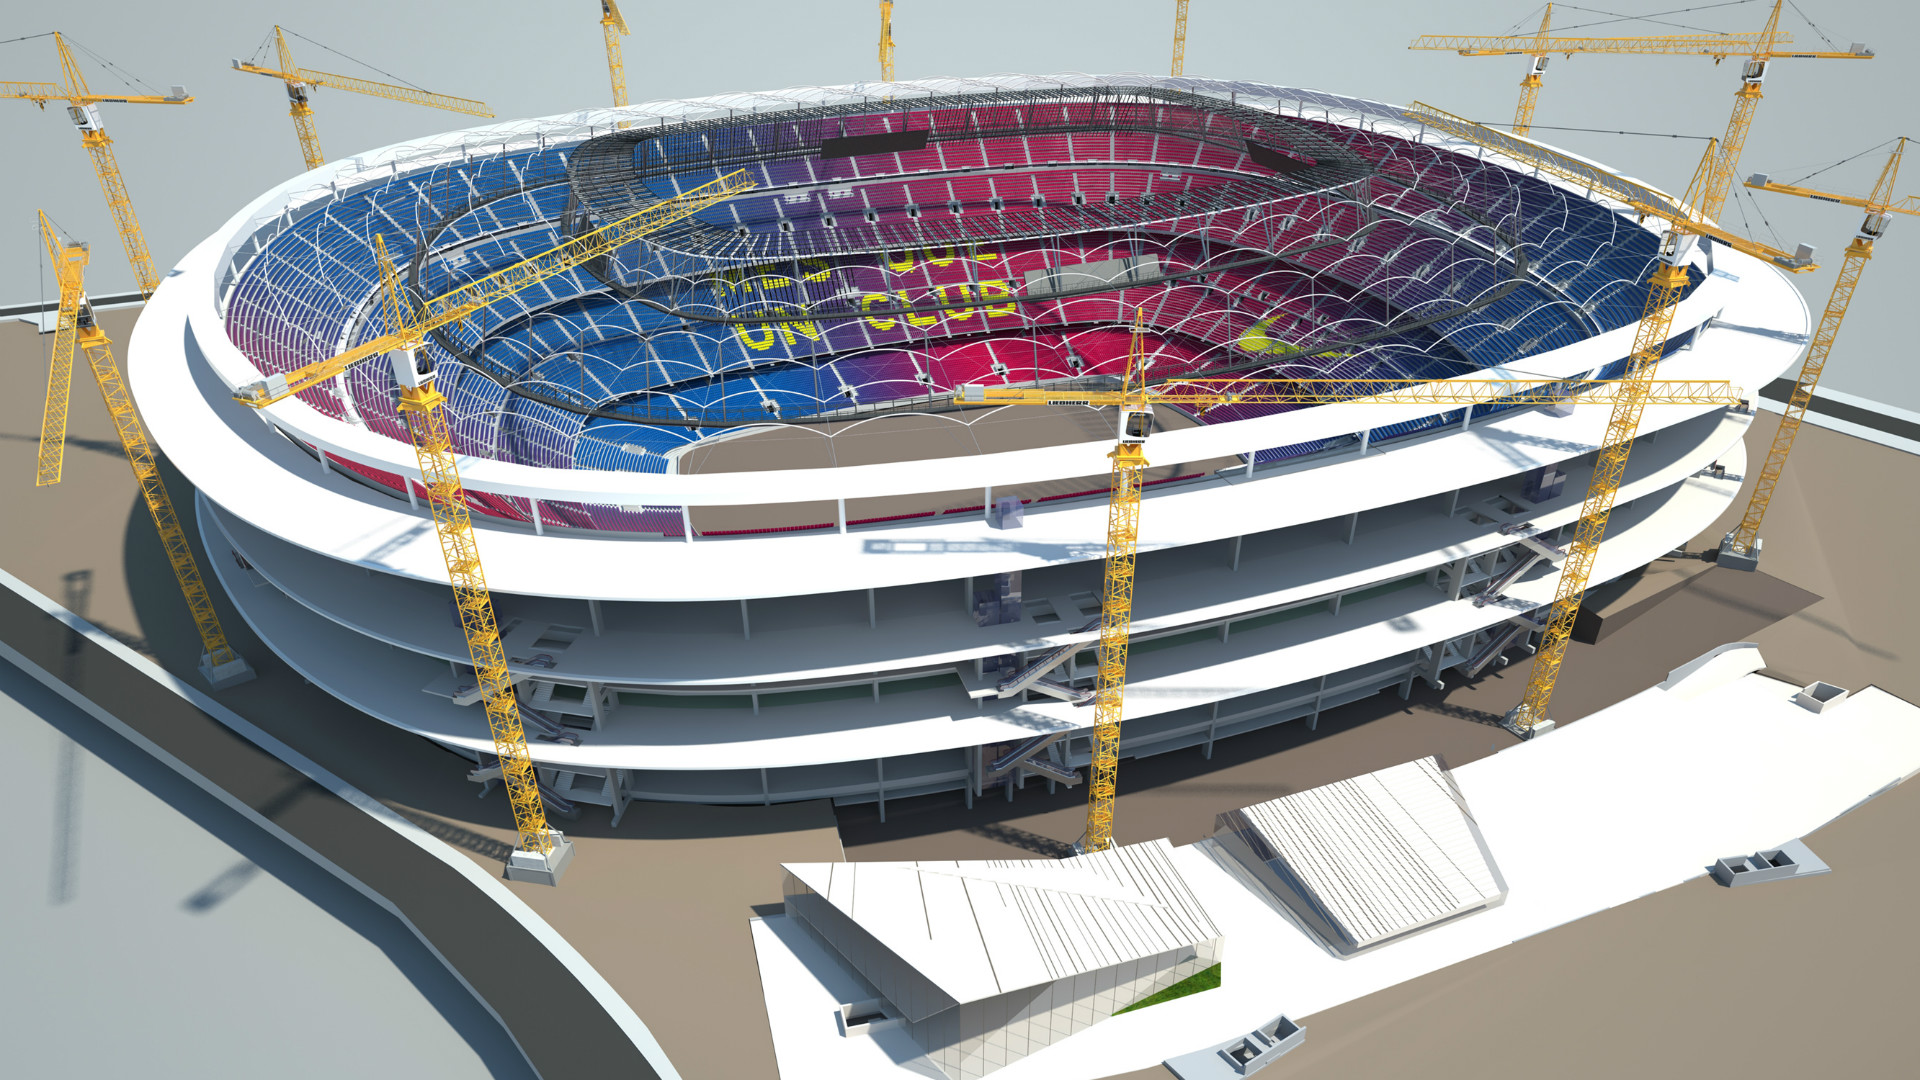 Камп нов. Барселона стадион Camp nou. Камп ноу реконструкция 2021. Новый стадион Камп ноу 2021. Новый стадион Барселоны.